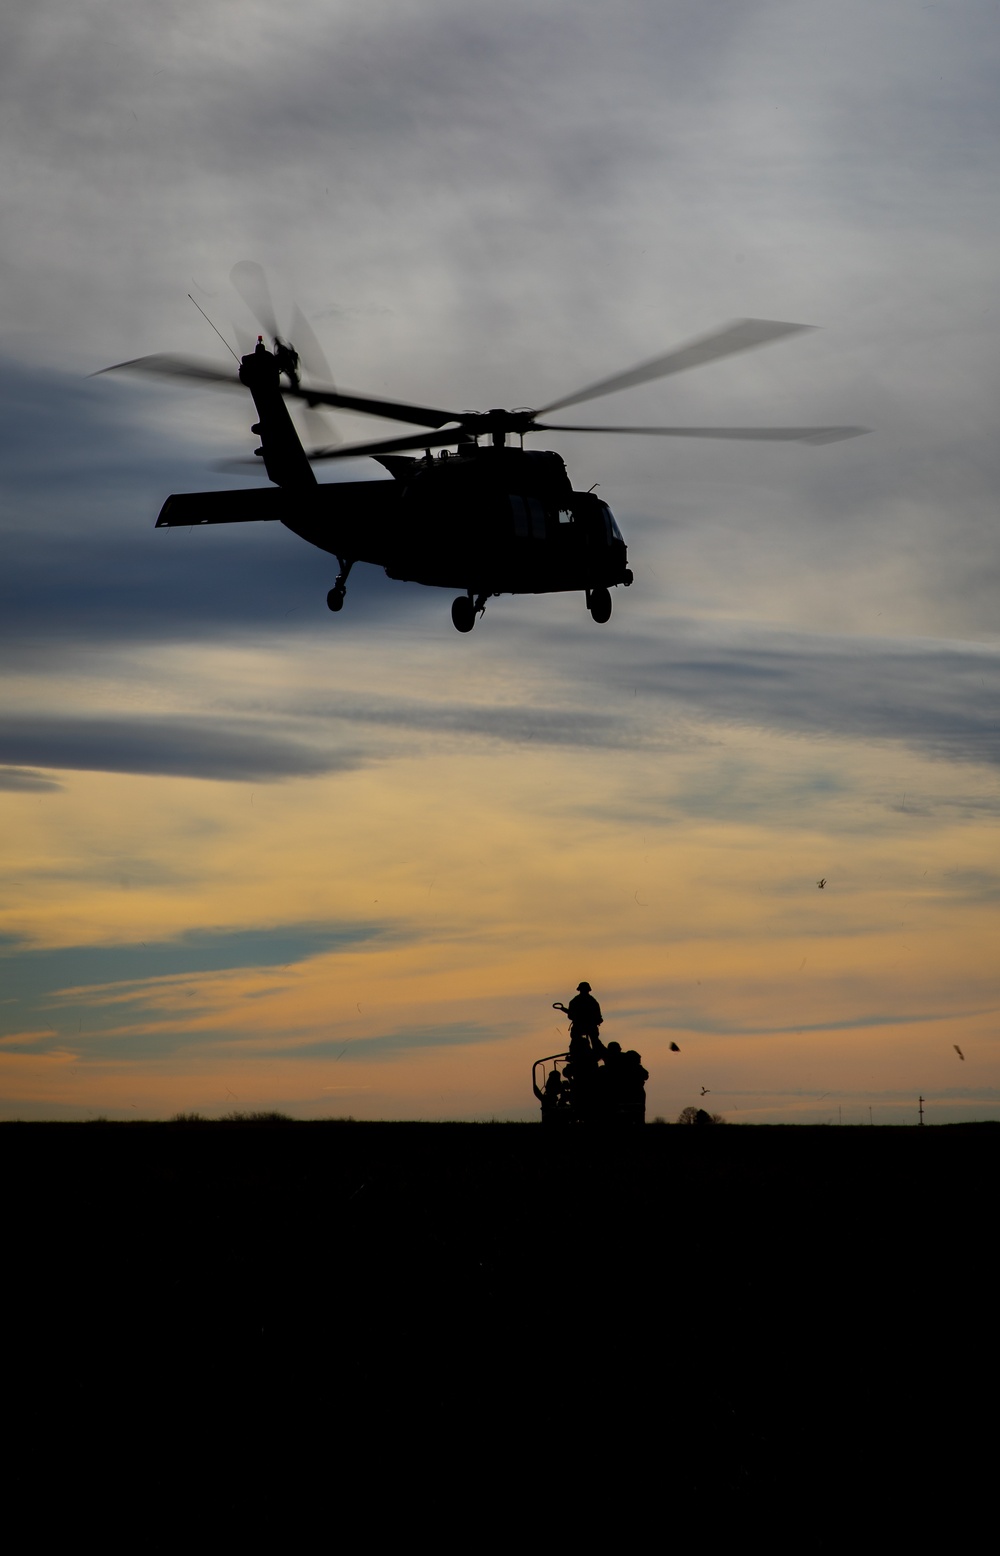 King of Battle gets a lift at Mihail Kogalniceanu Air Base